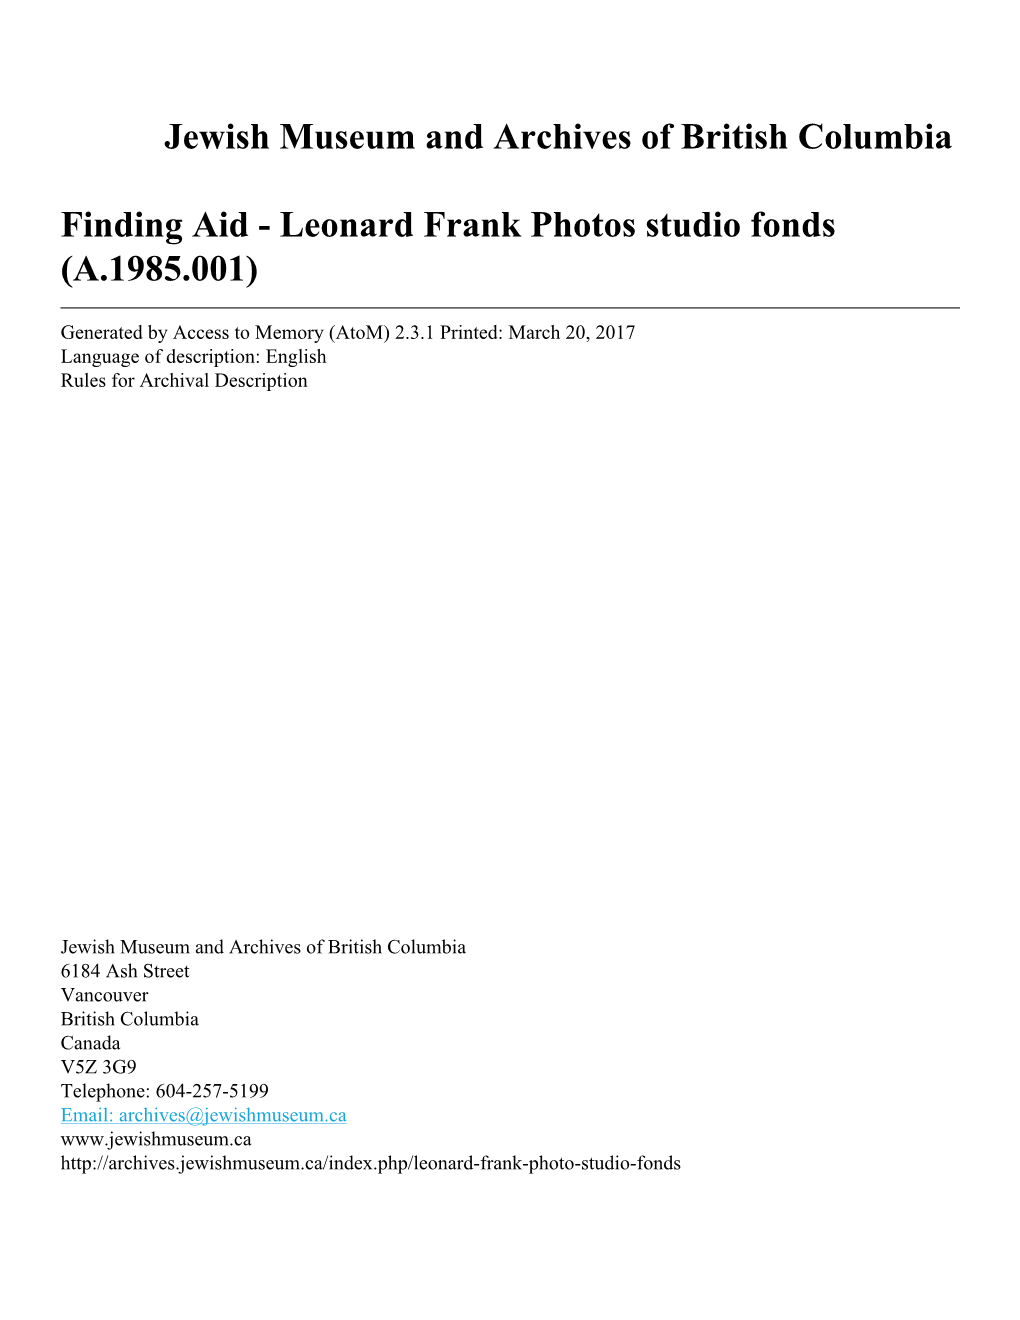 Leonard Frank Photos Studio Fonds (A.1985.001)